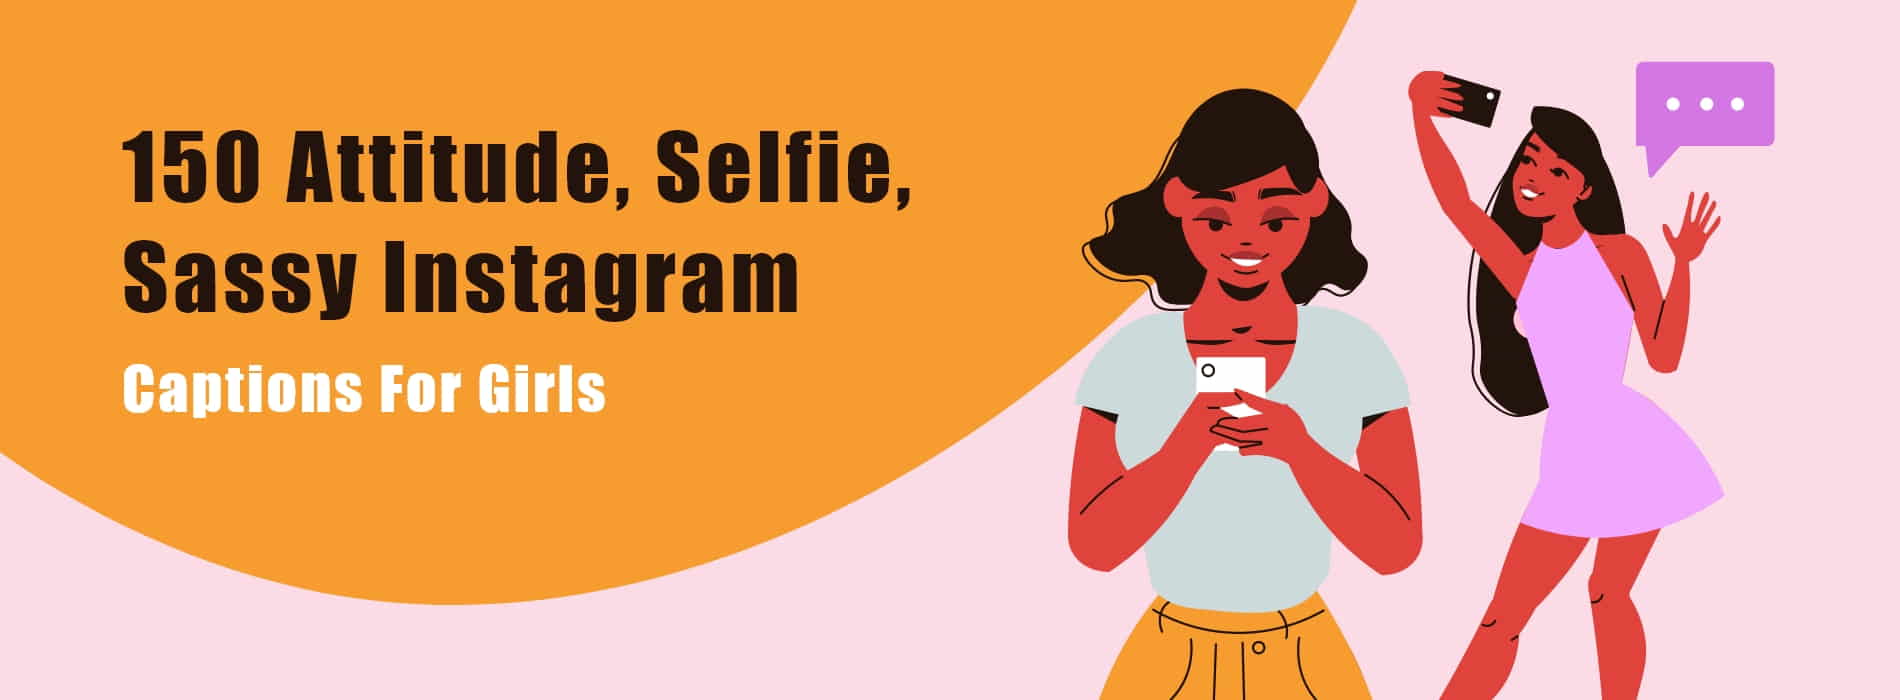 150 Attitude/Selfie/Sassy Instagram Captions For Girls | Viraasi